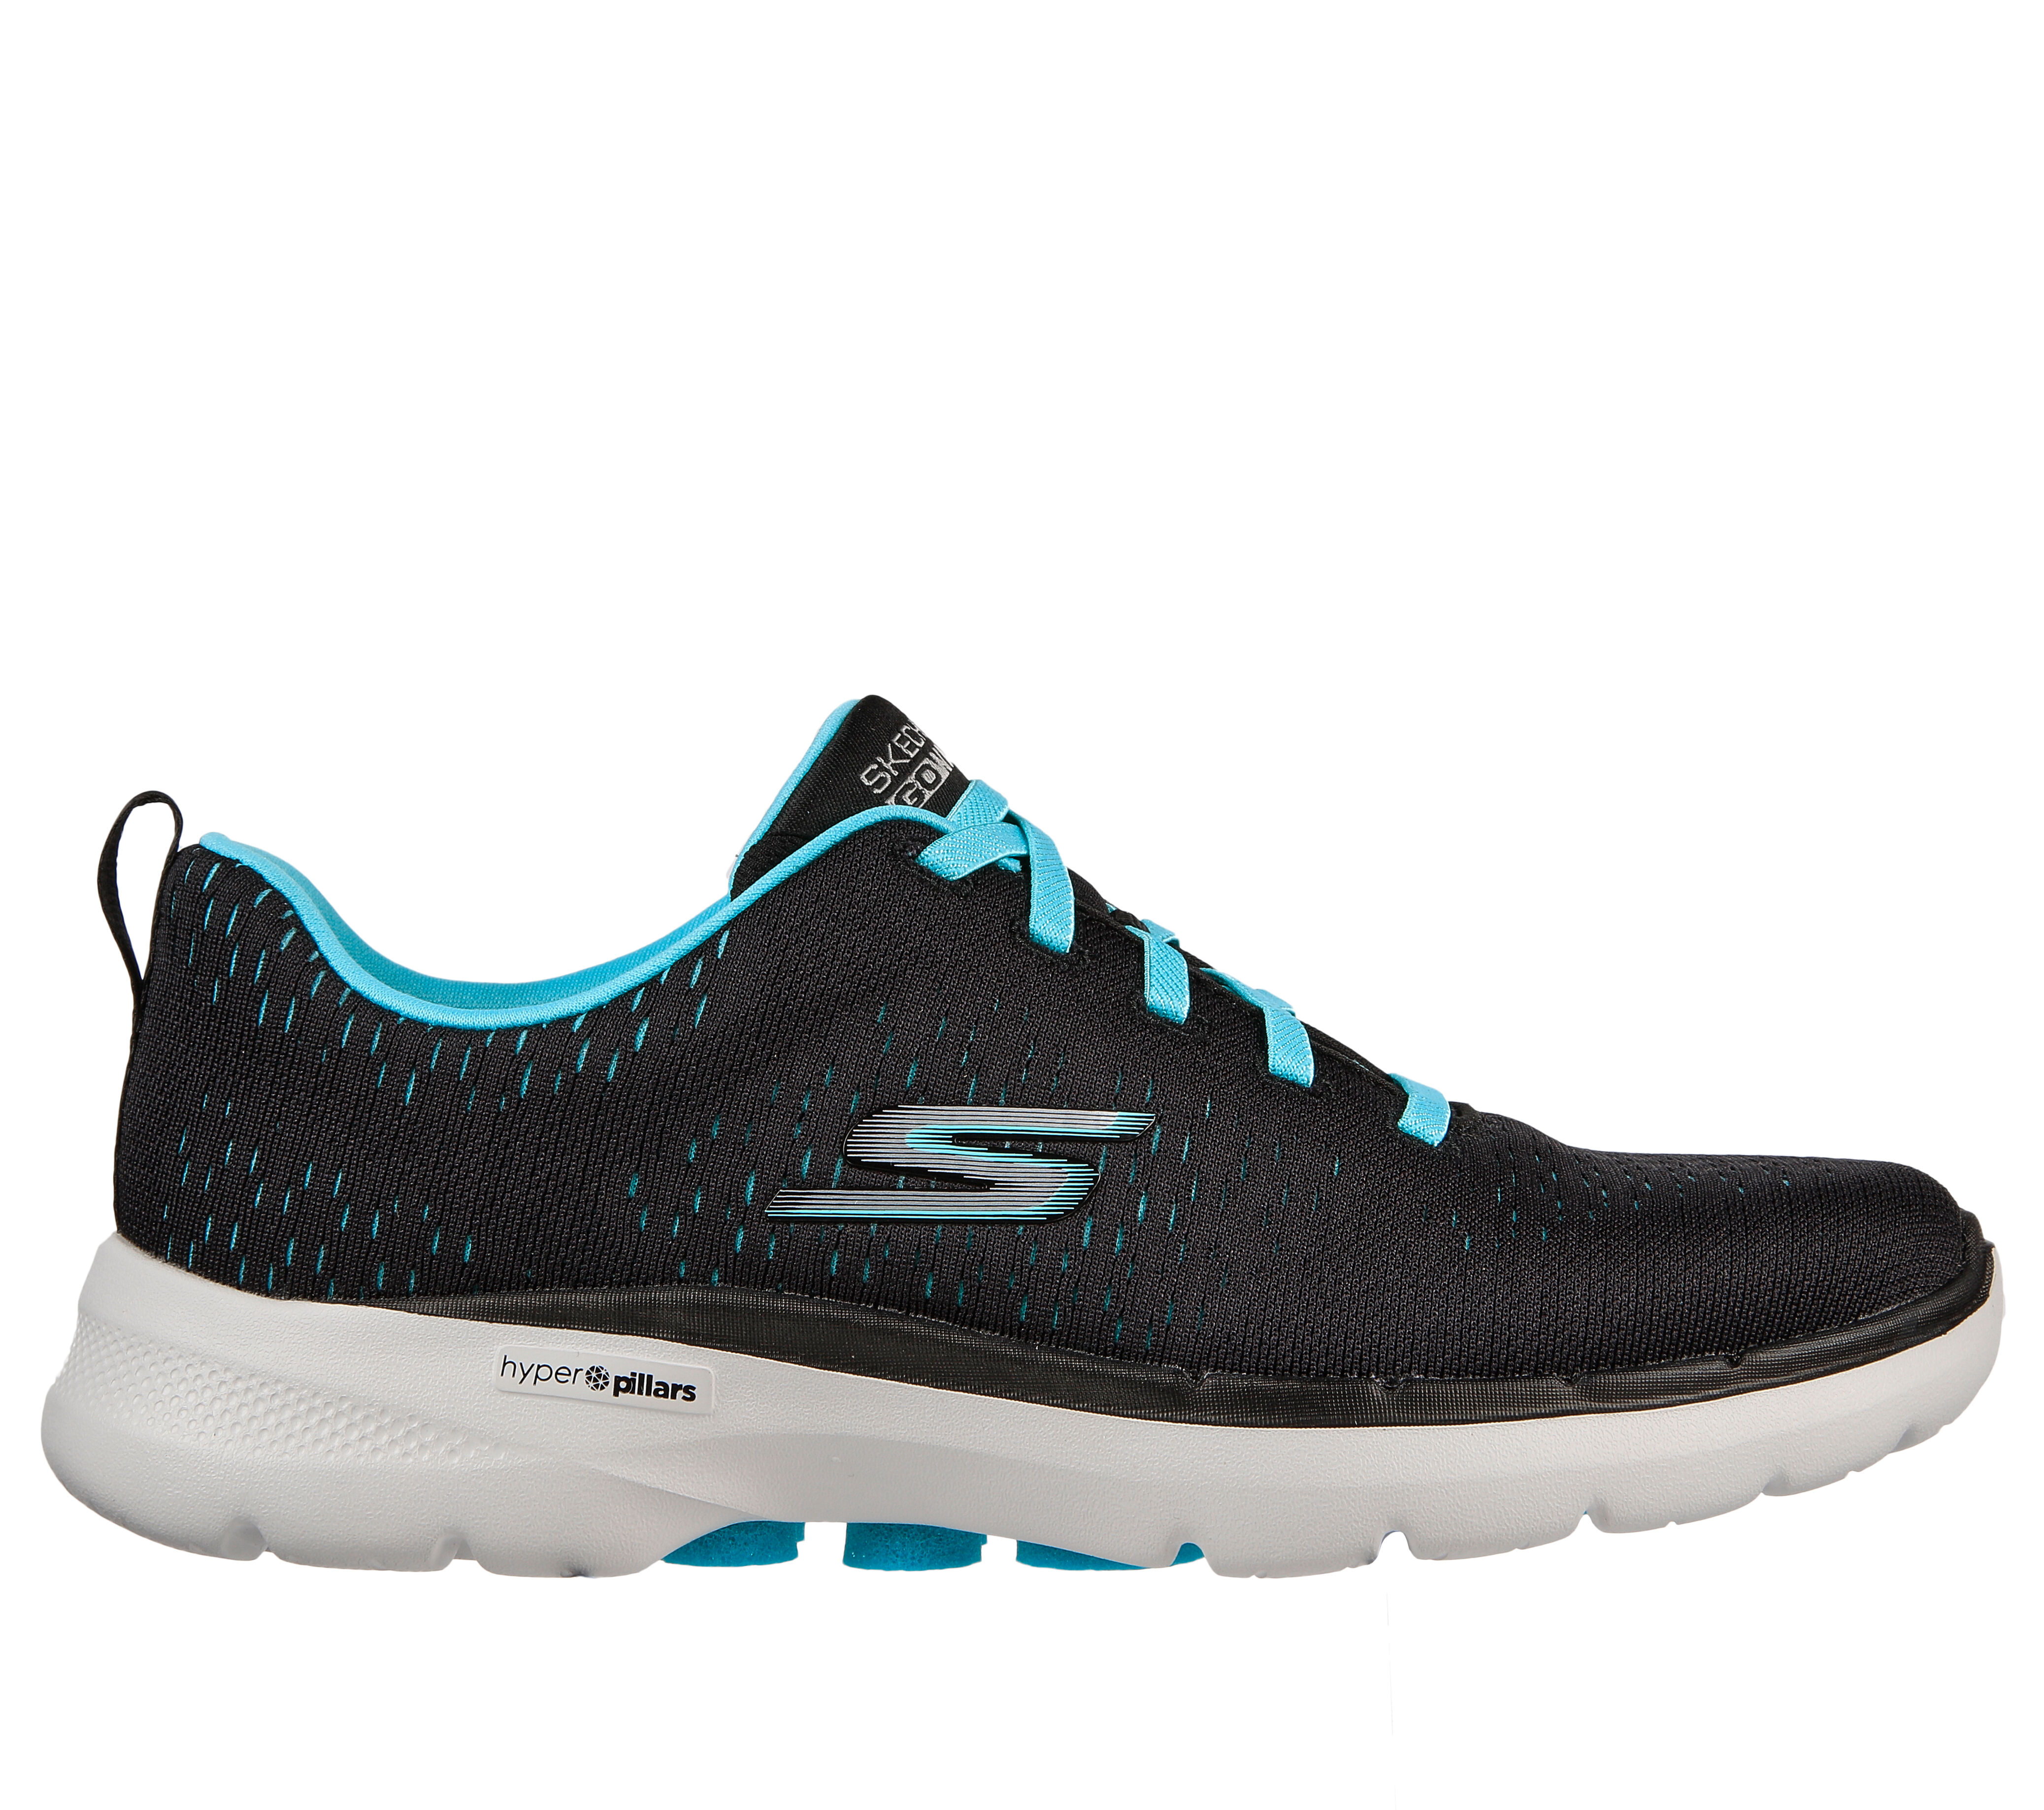 Skechers GoWalk | Comfortable Walking Shoes | SKECHERS UK